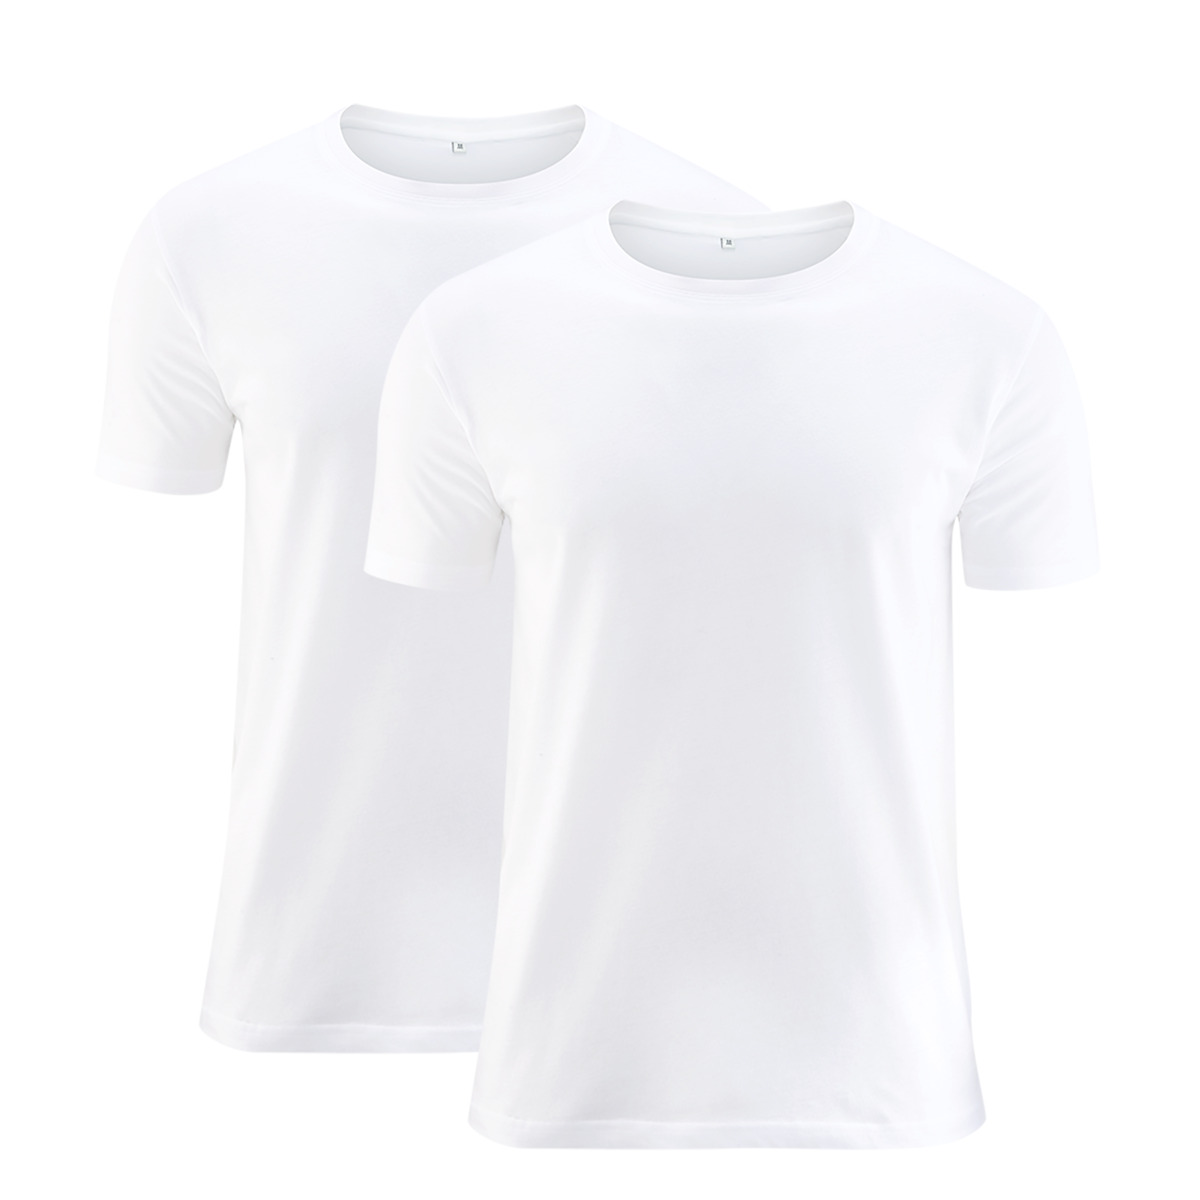 Blanc T-shirt, lot de 2, 